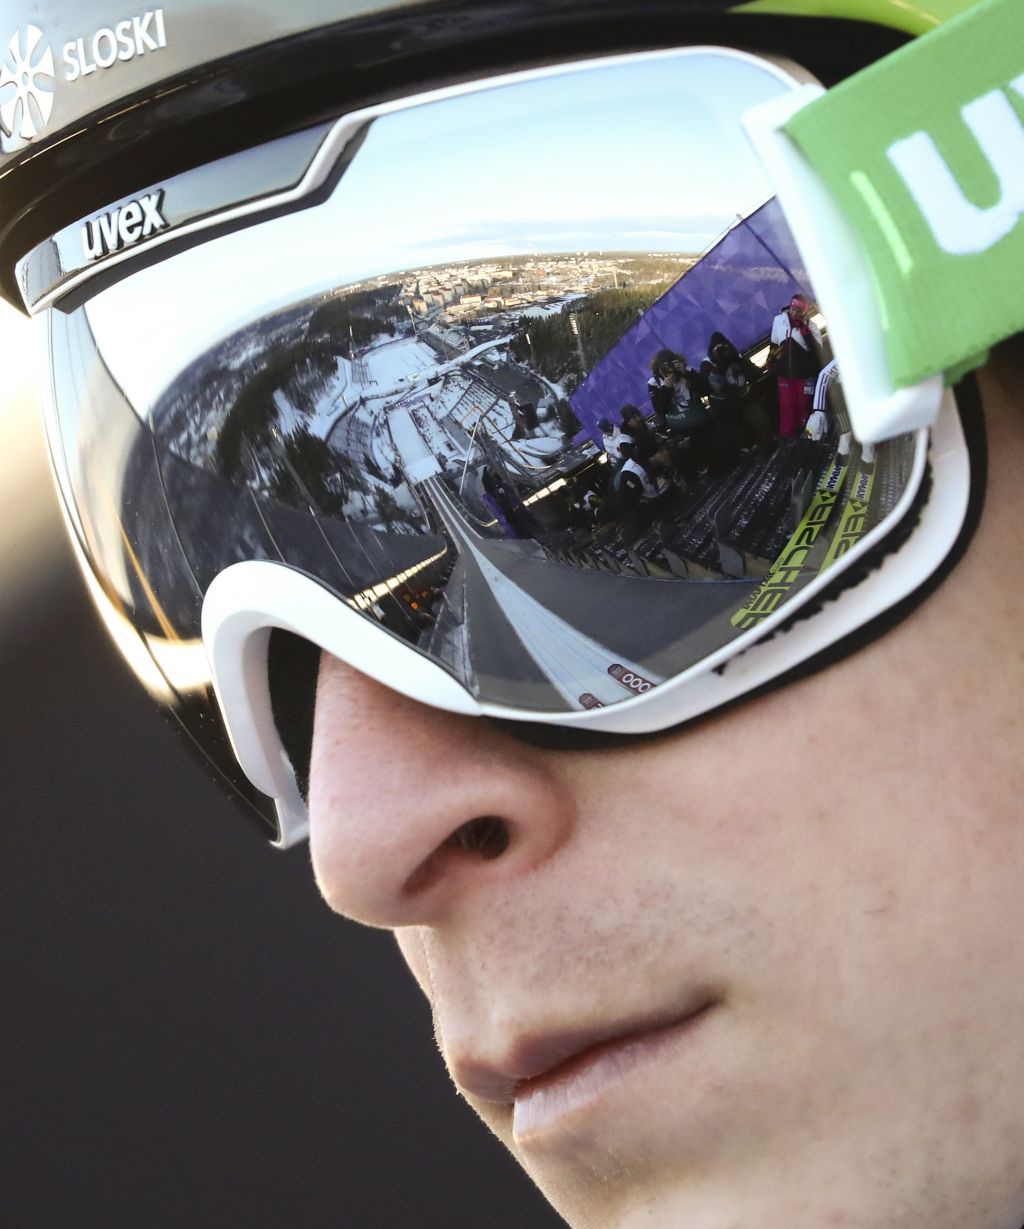 VIDEO: Skakalna tekma v Lillehammerju odpovedana! To je drama Jerneja Damjana